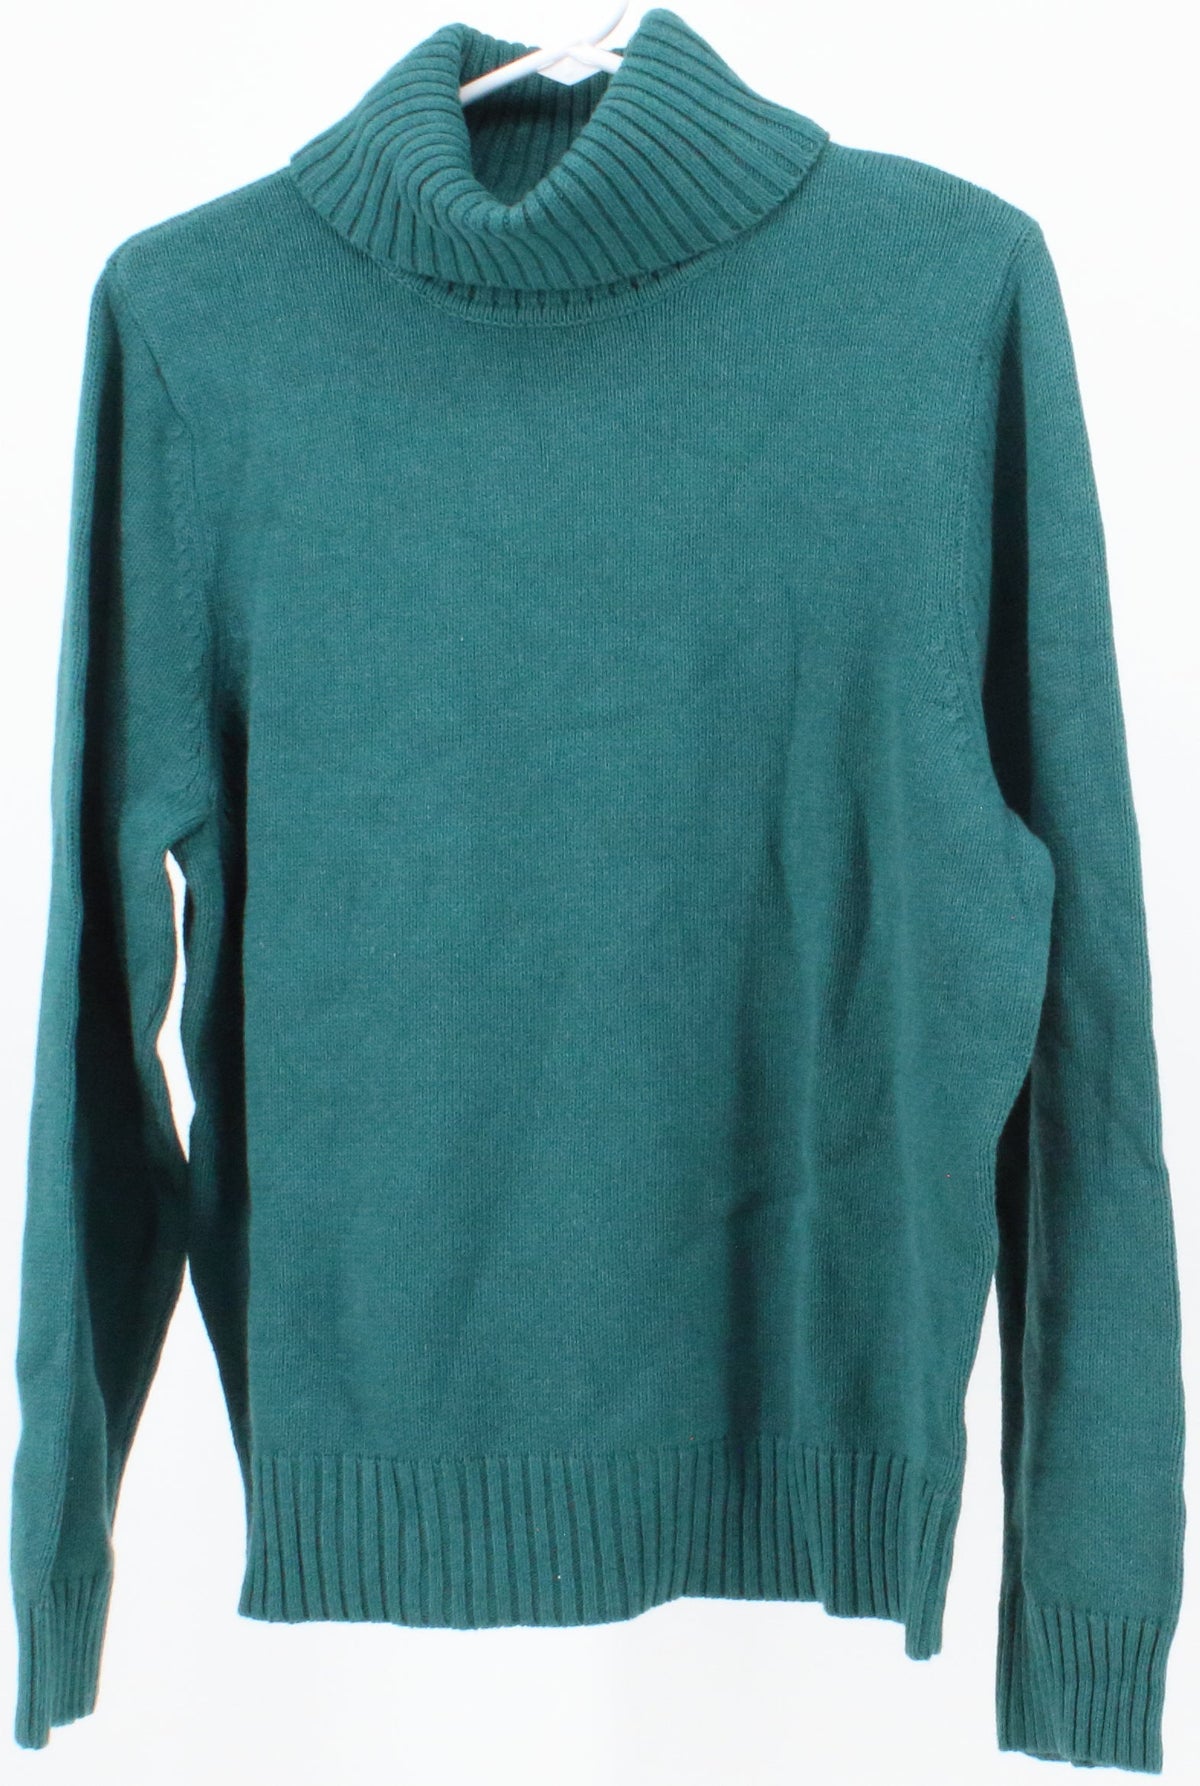 Croft & Barrow Green Turtleneck Sweater